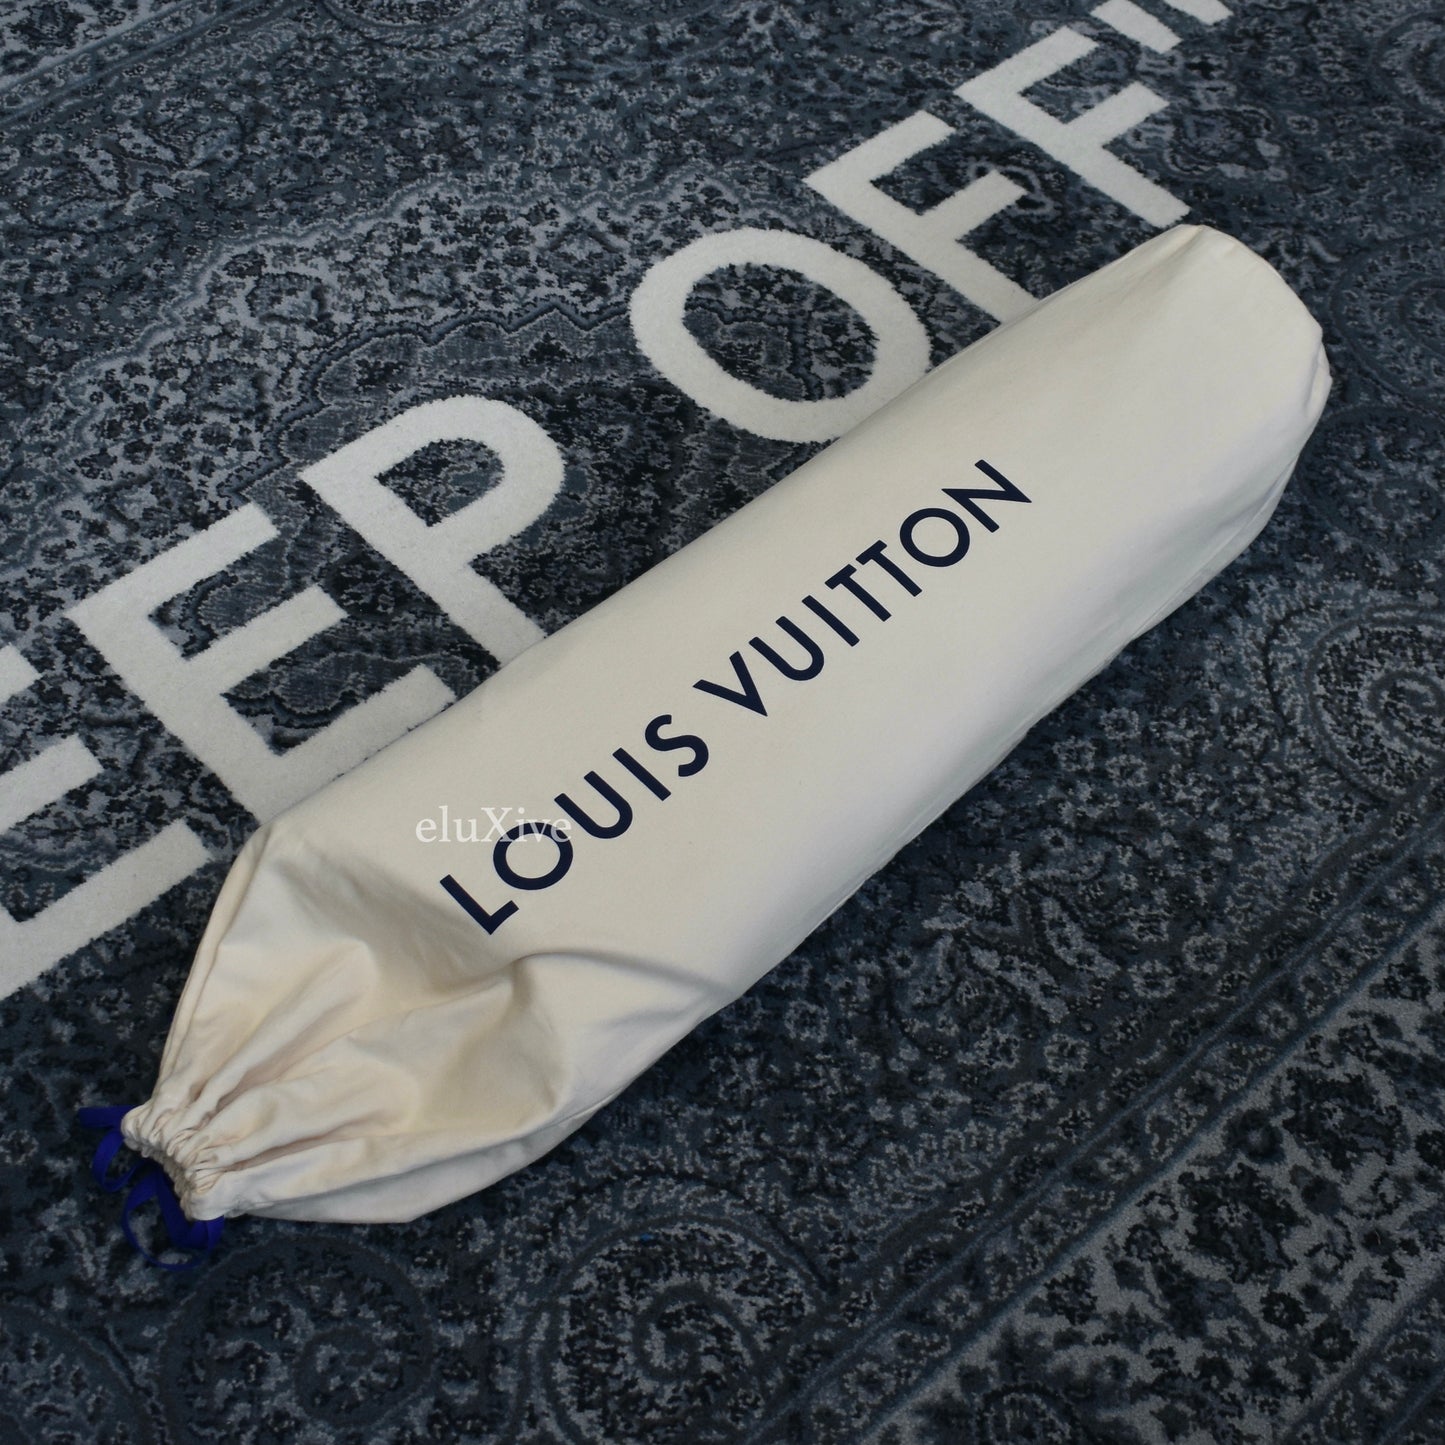 Louis Vuitton x Nigo - LV Made Tiger Carpet Rug